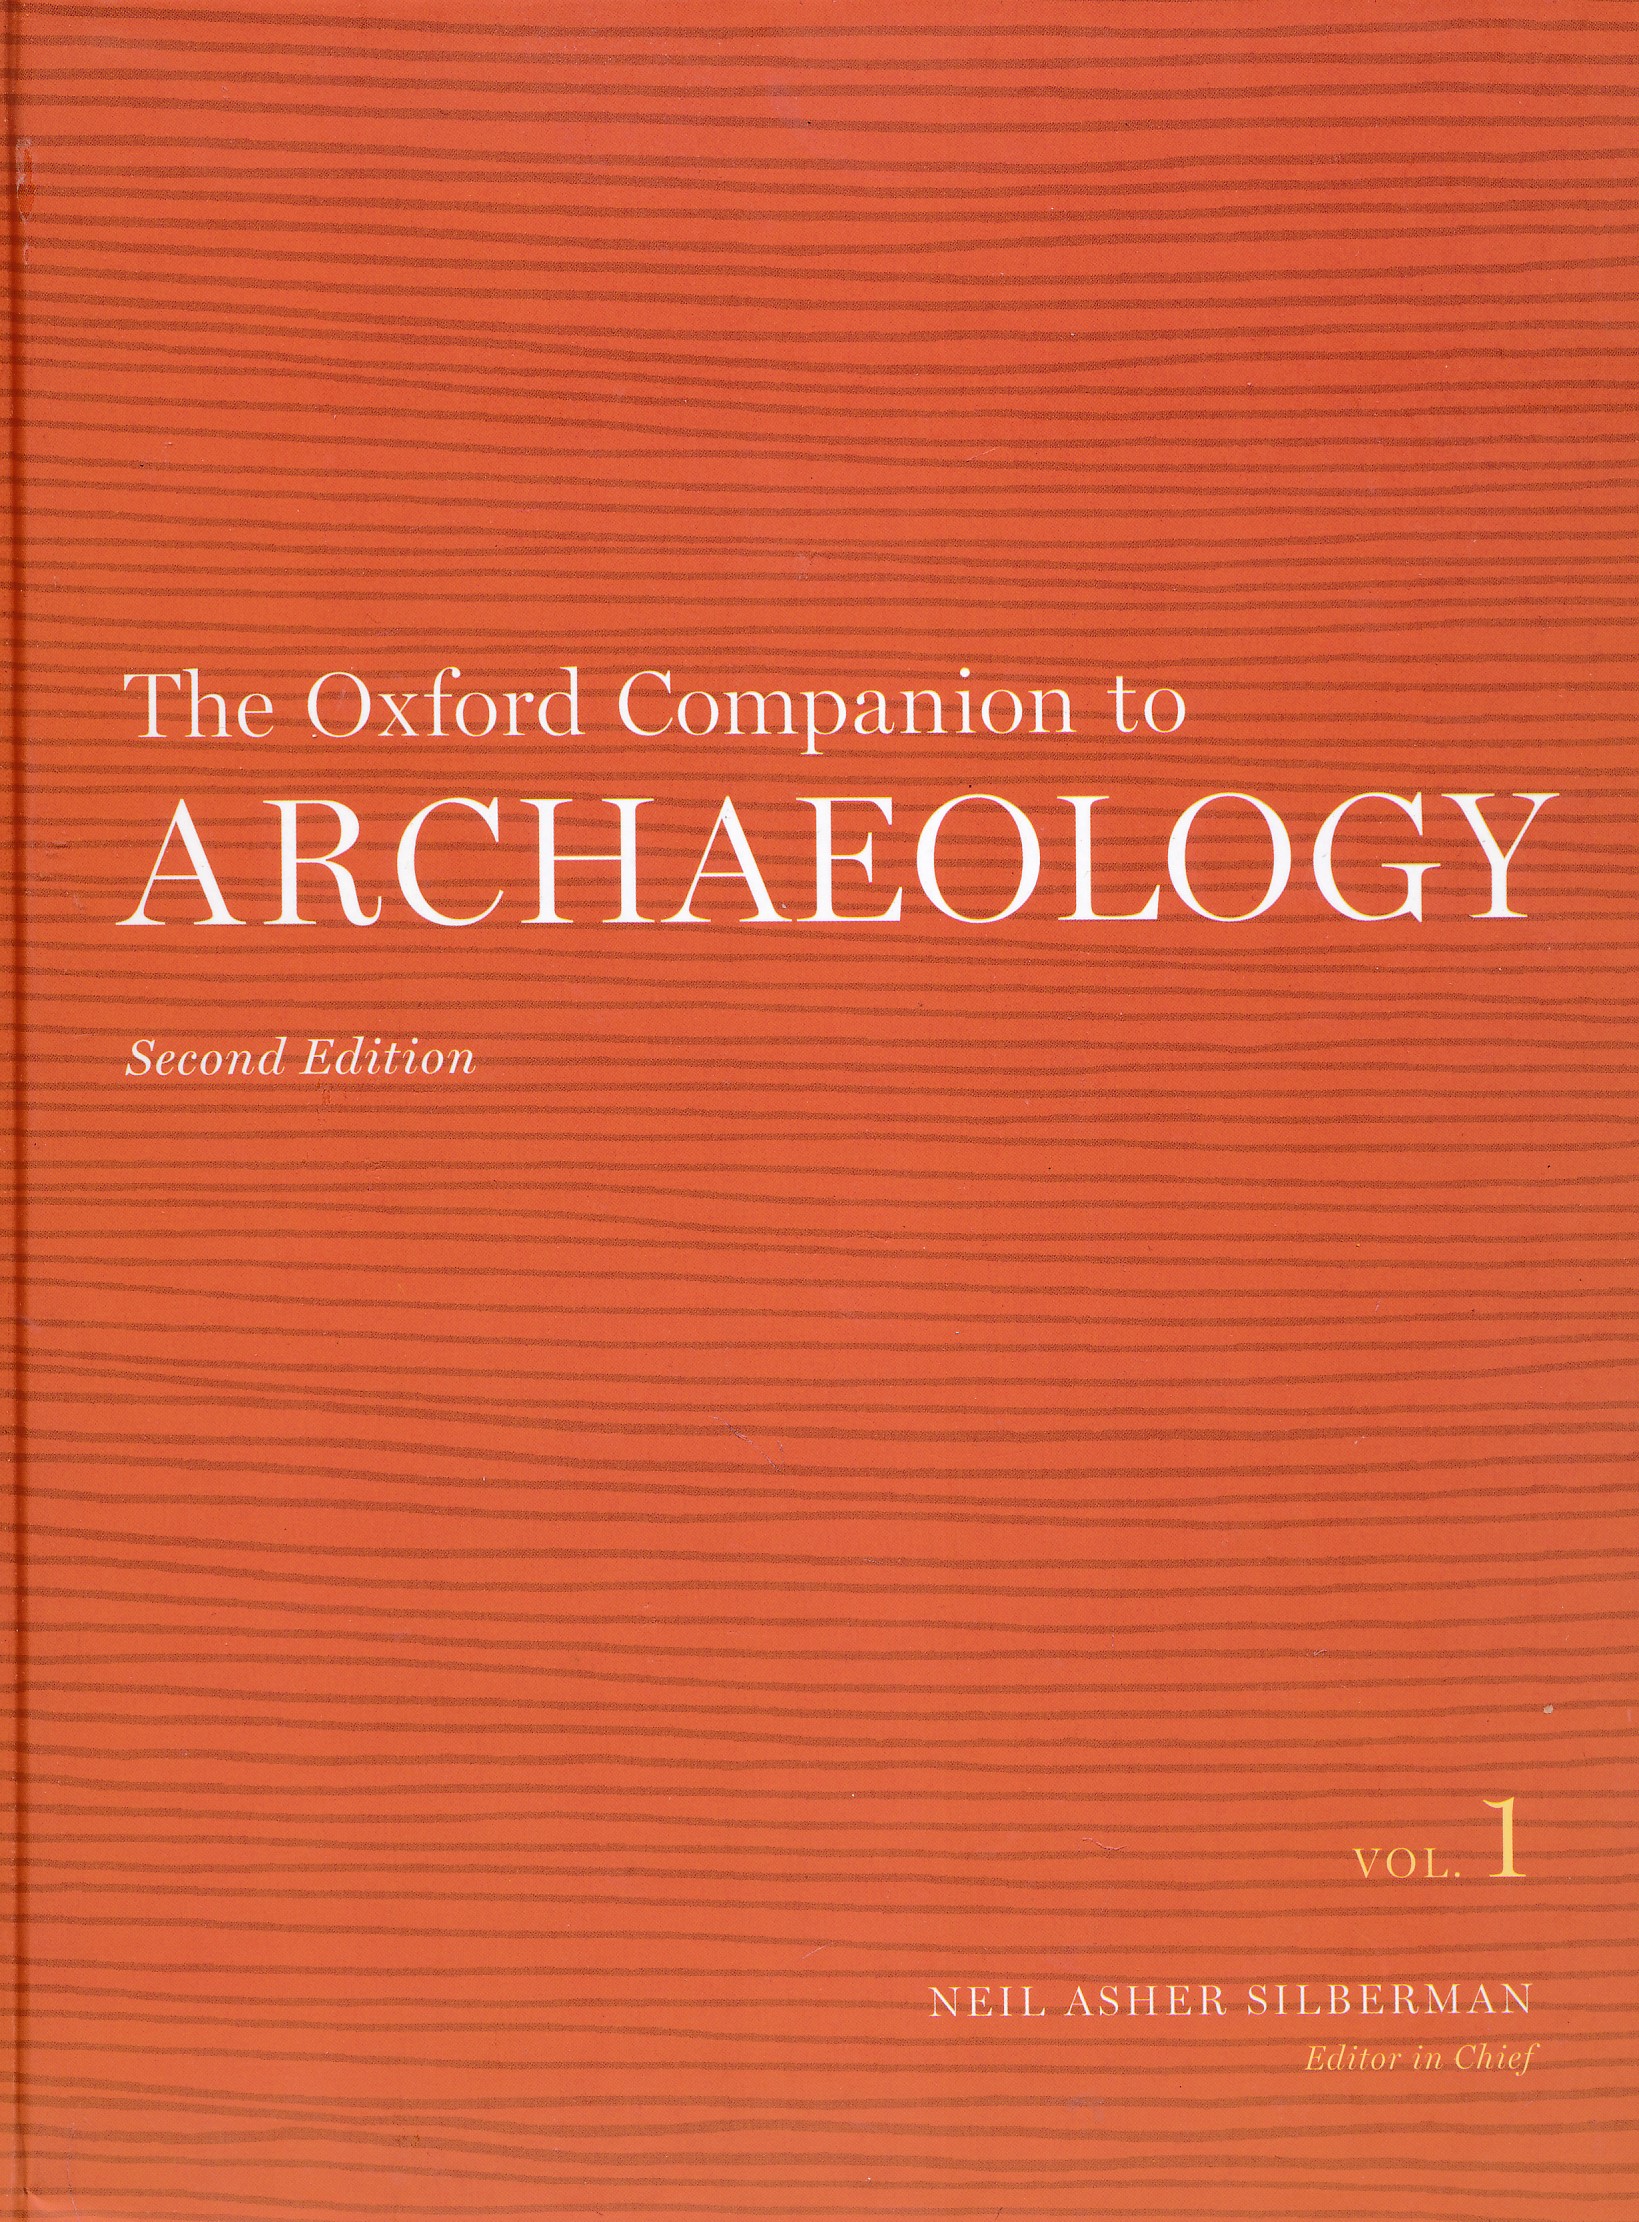 The Oxford Companion to Archaeology. 3 volume set